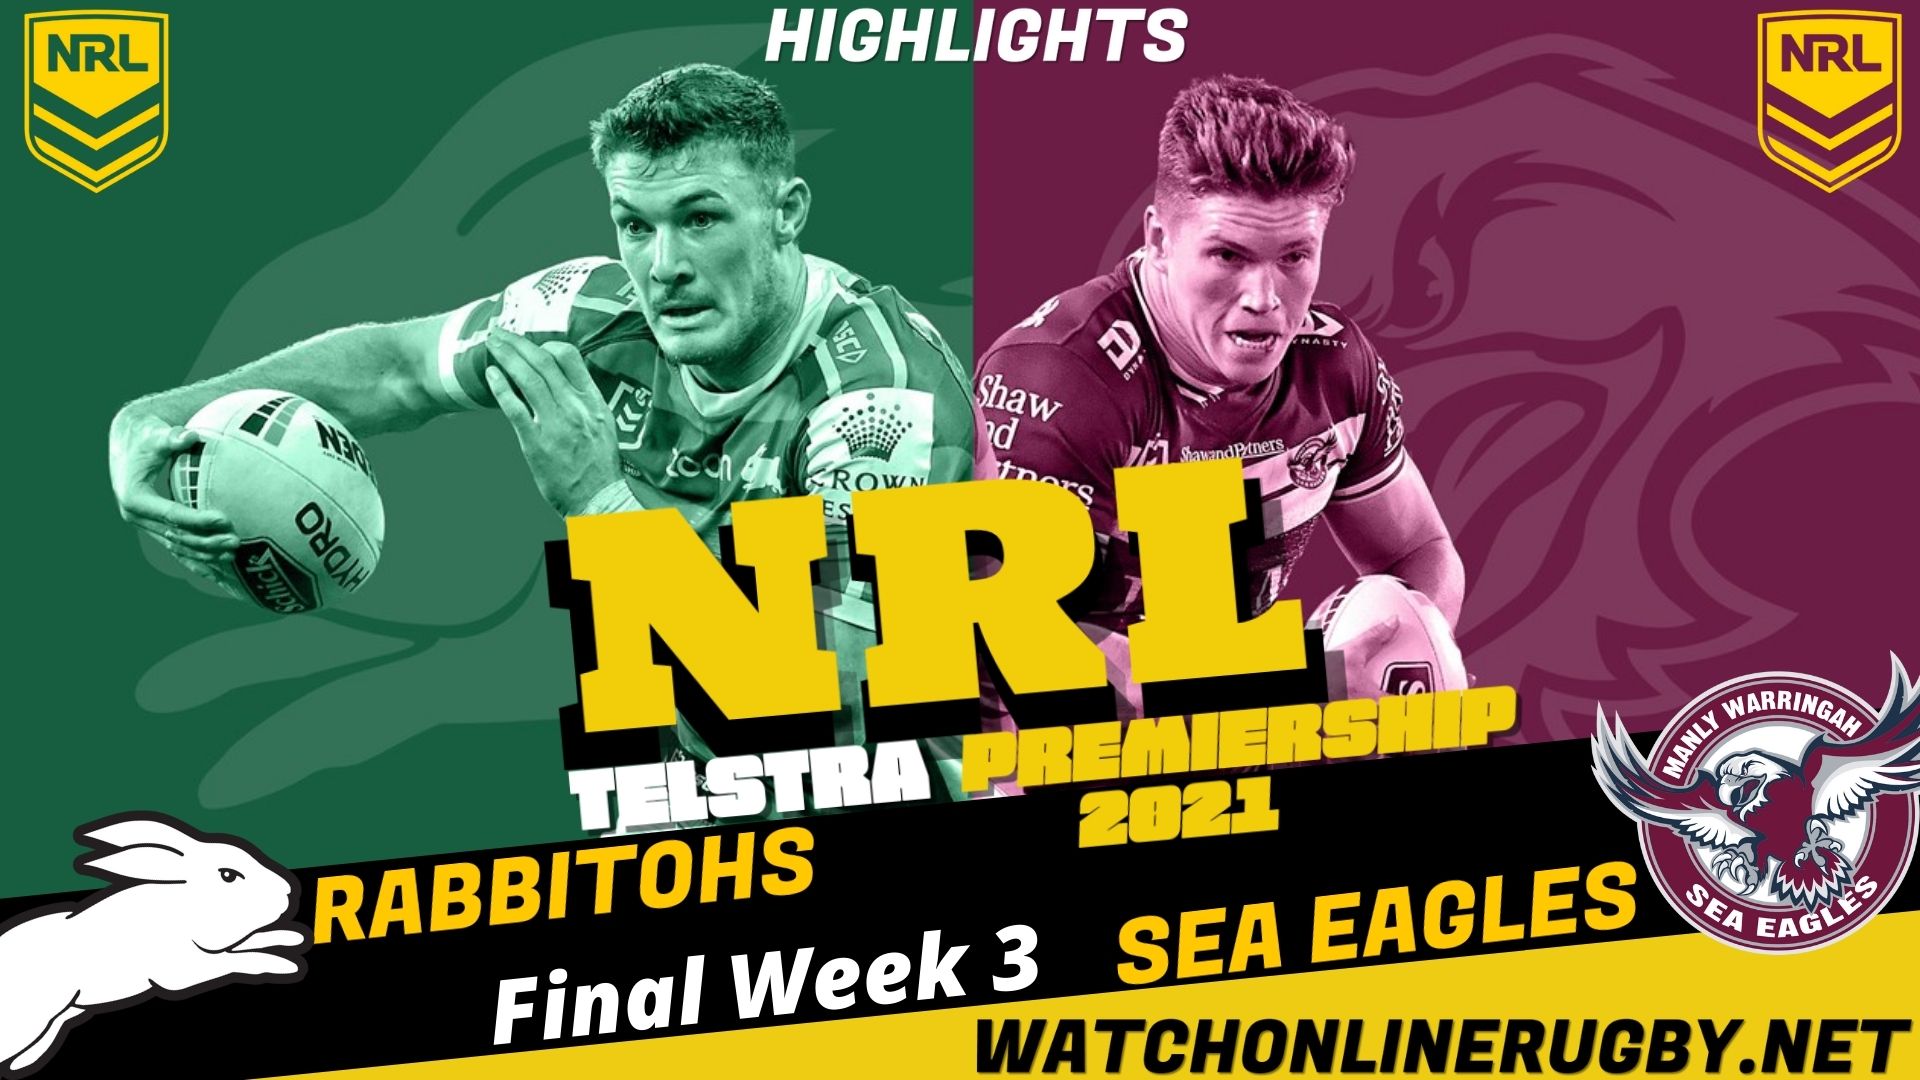 Rabbitohs Vs Sea Eagles Highlights Final Week 3 NRL Rugby